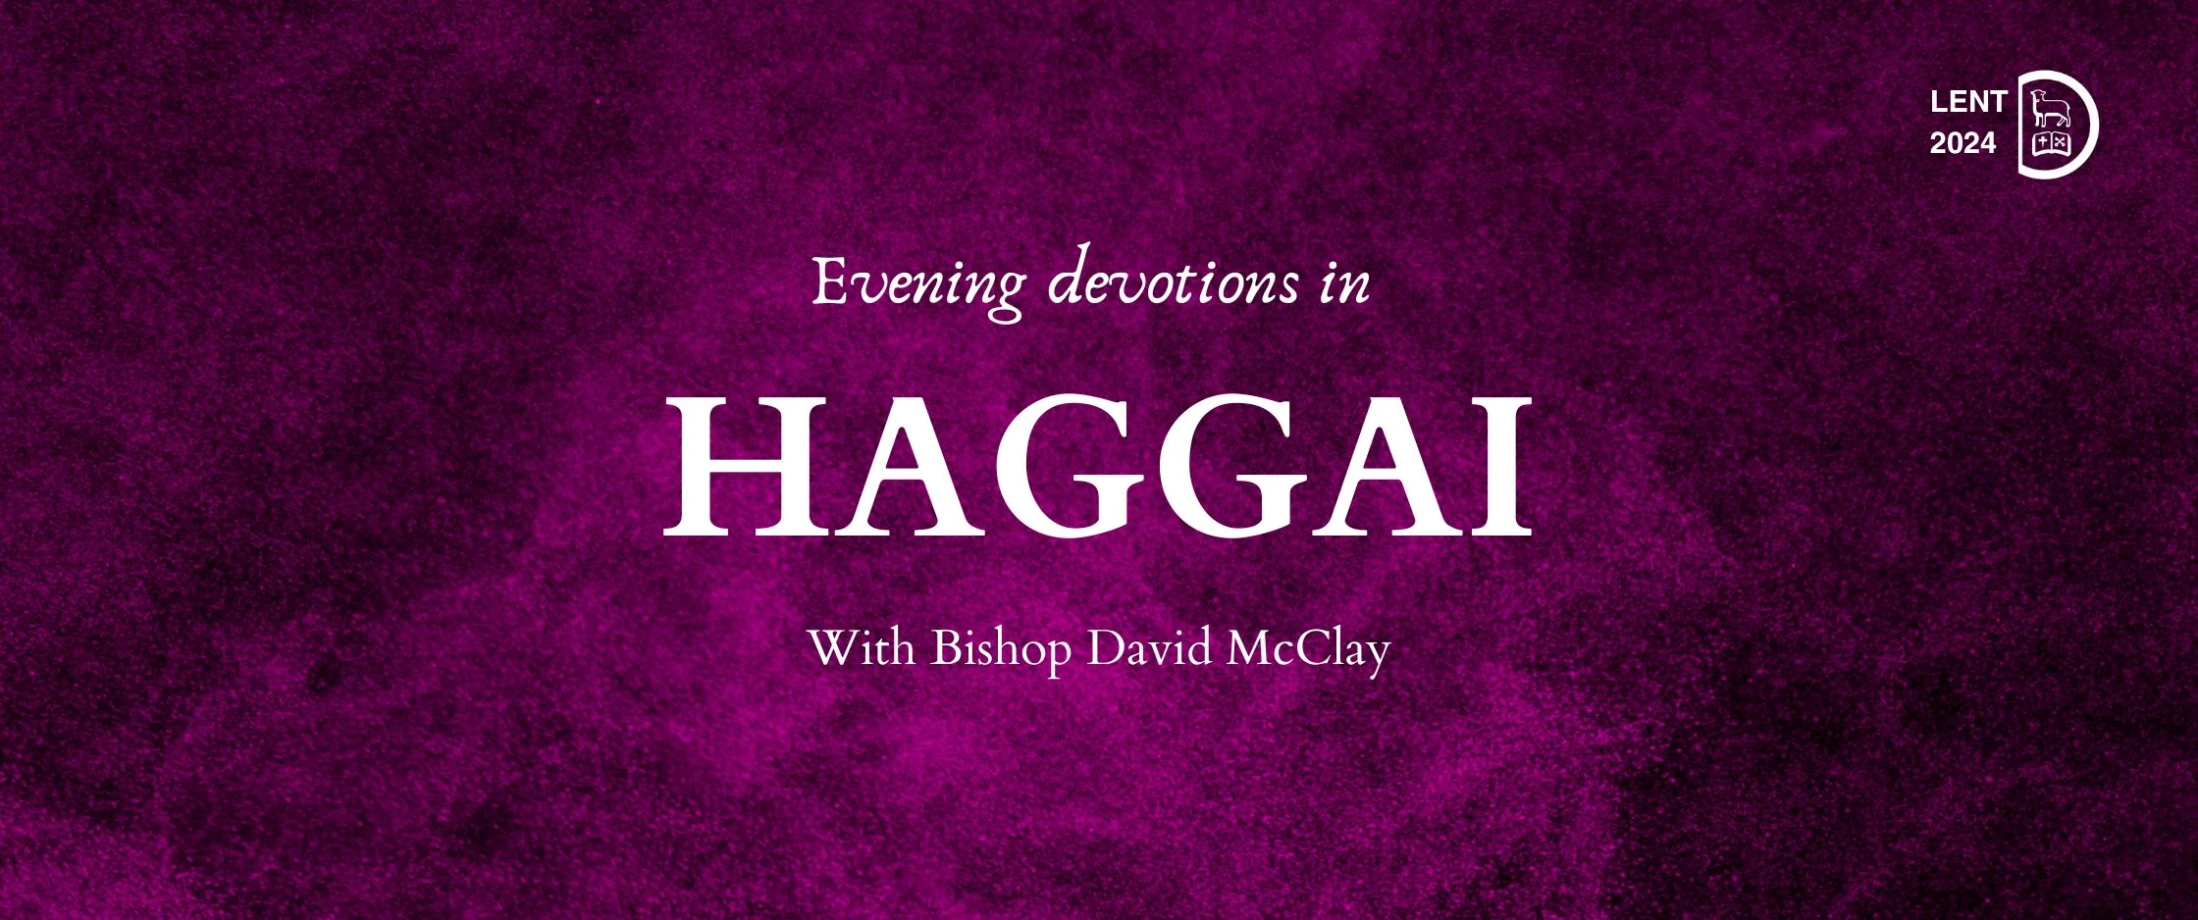 Day 32: Haggai 2:19